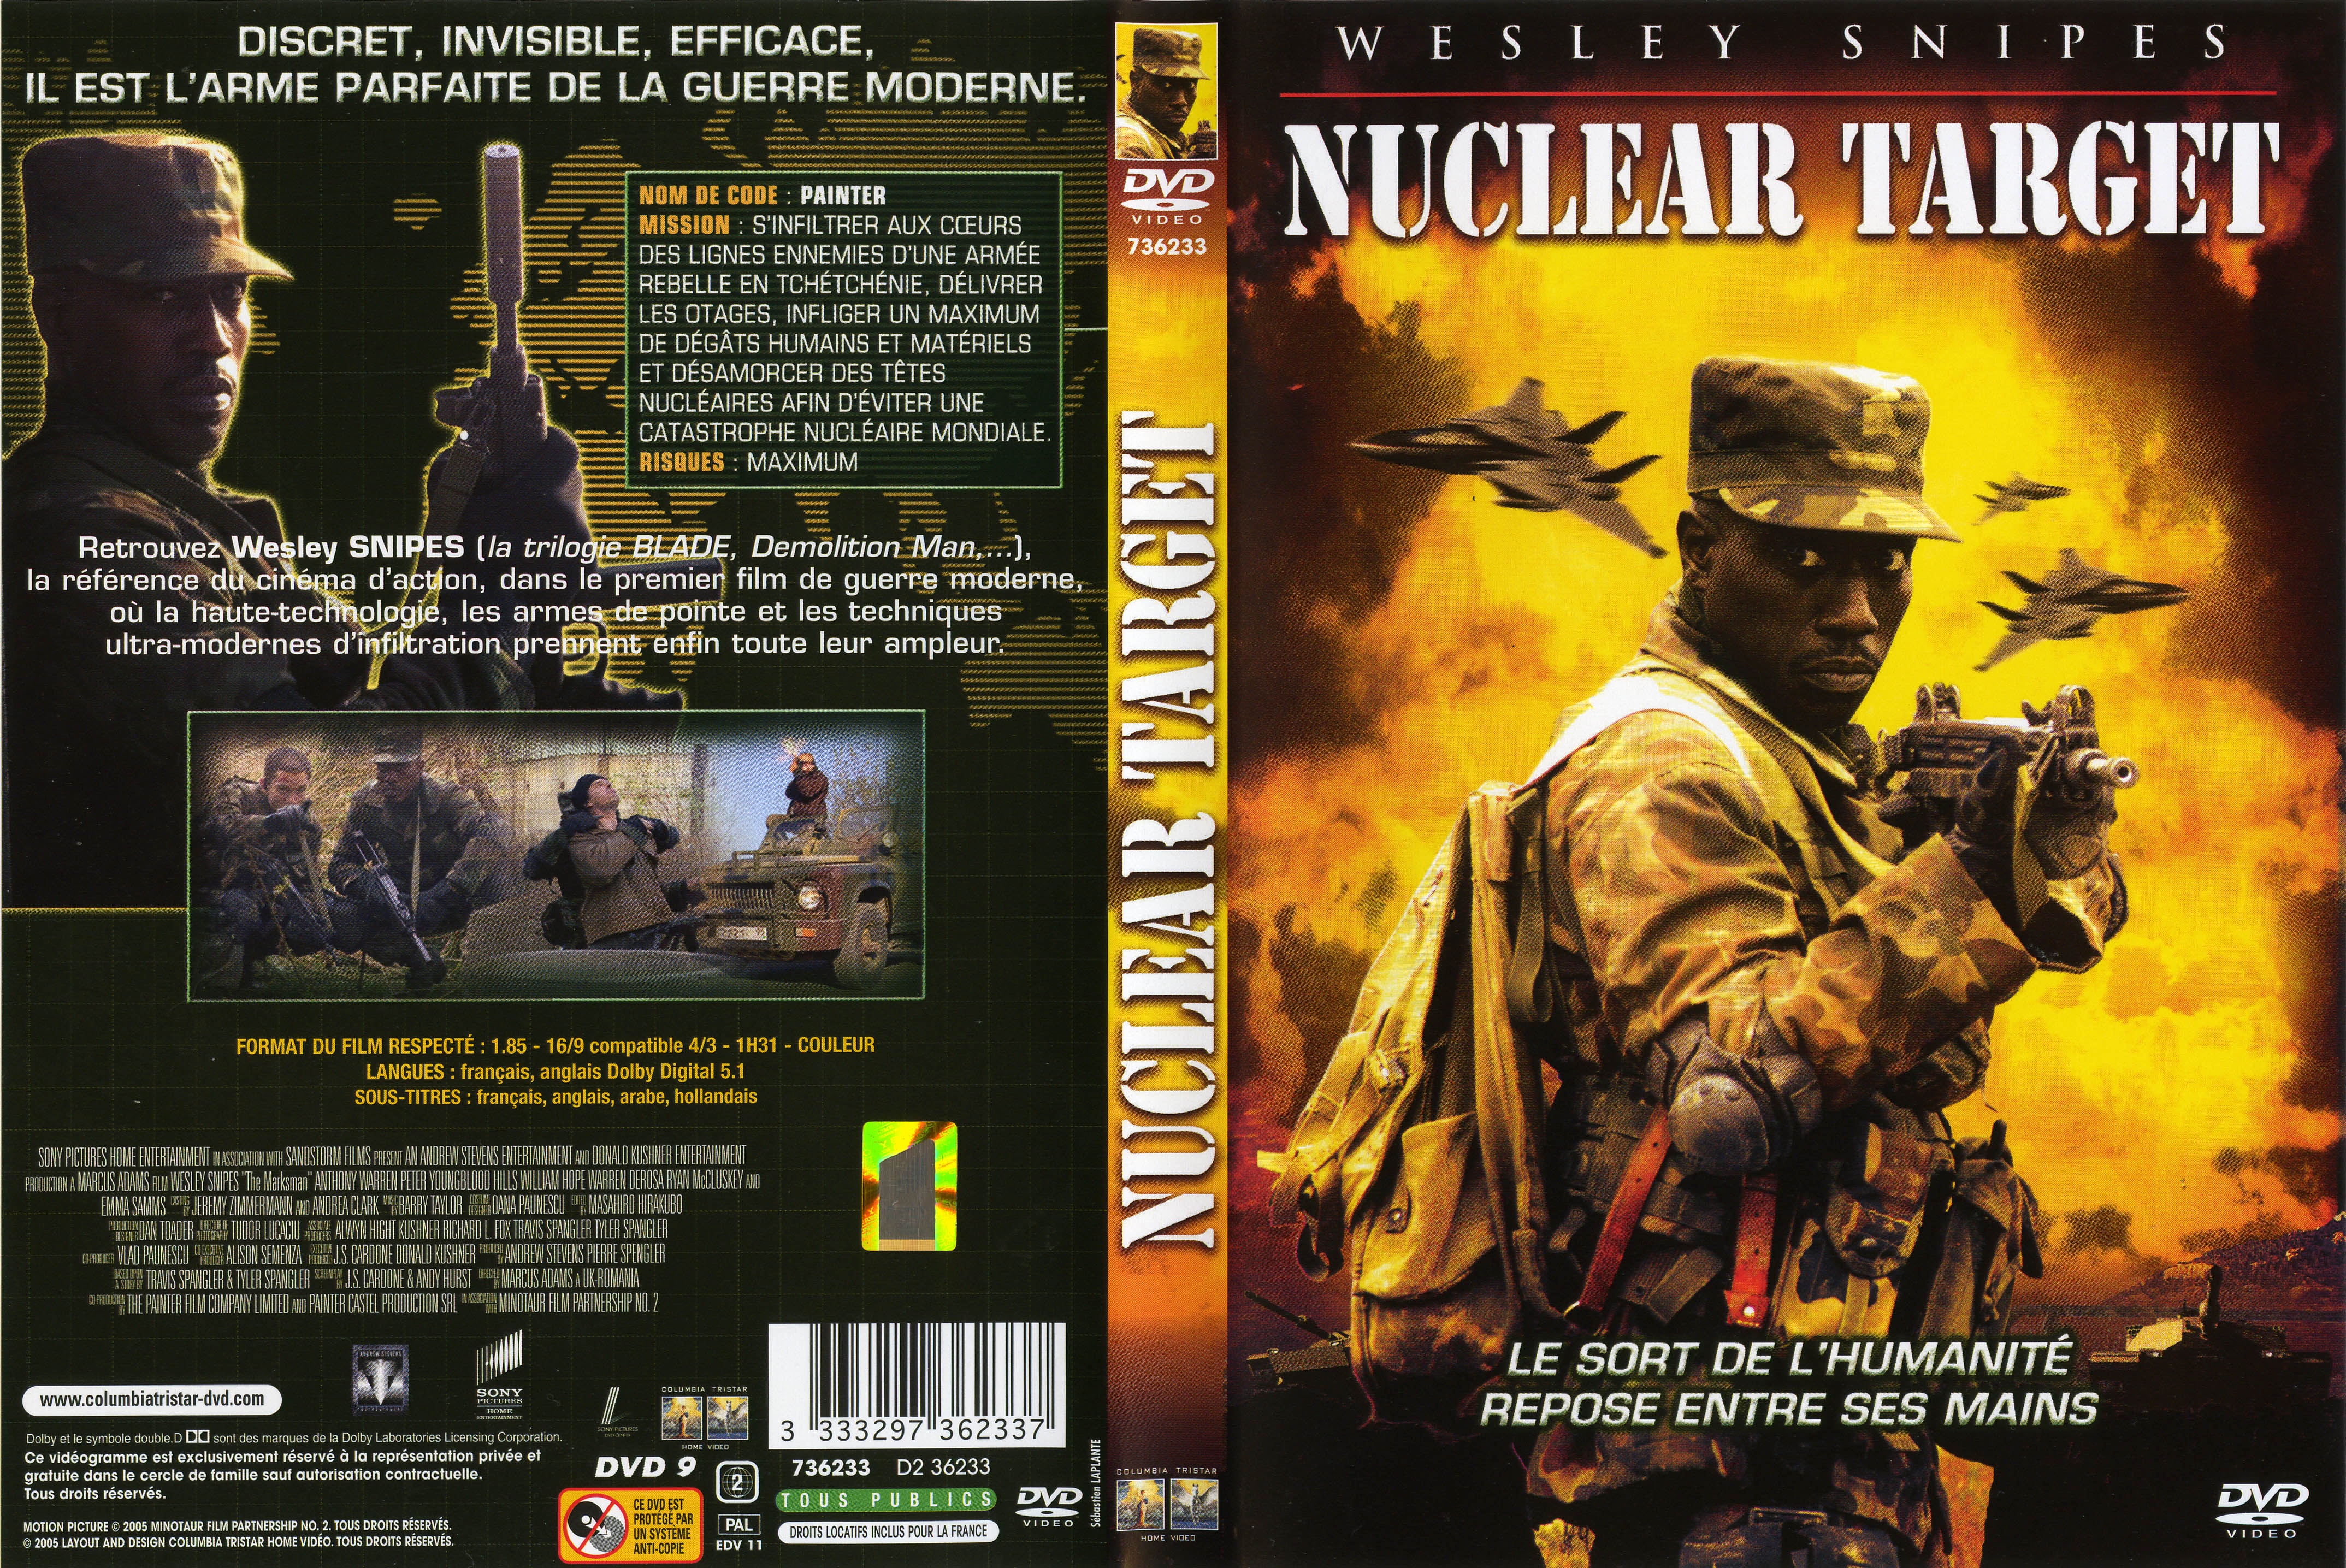 Jaquette DVD Nuclear target v2